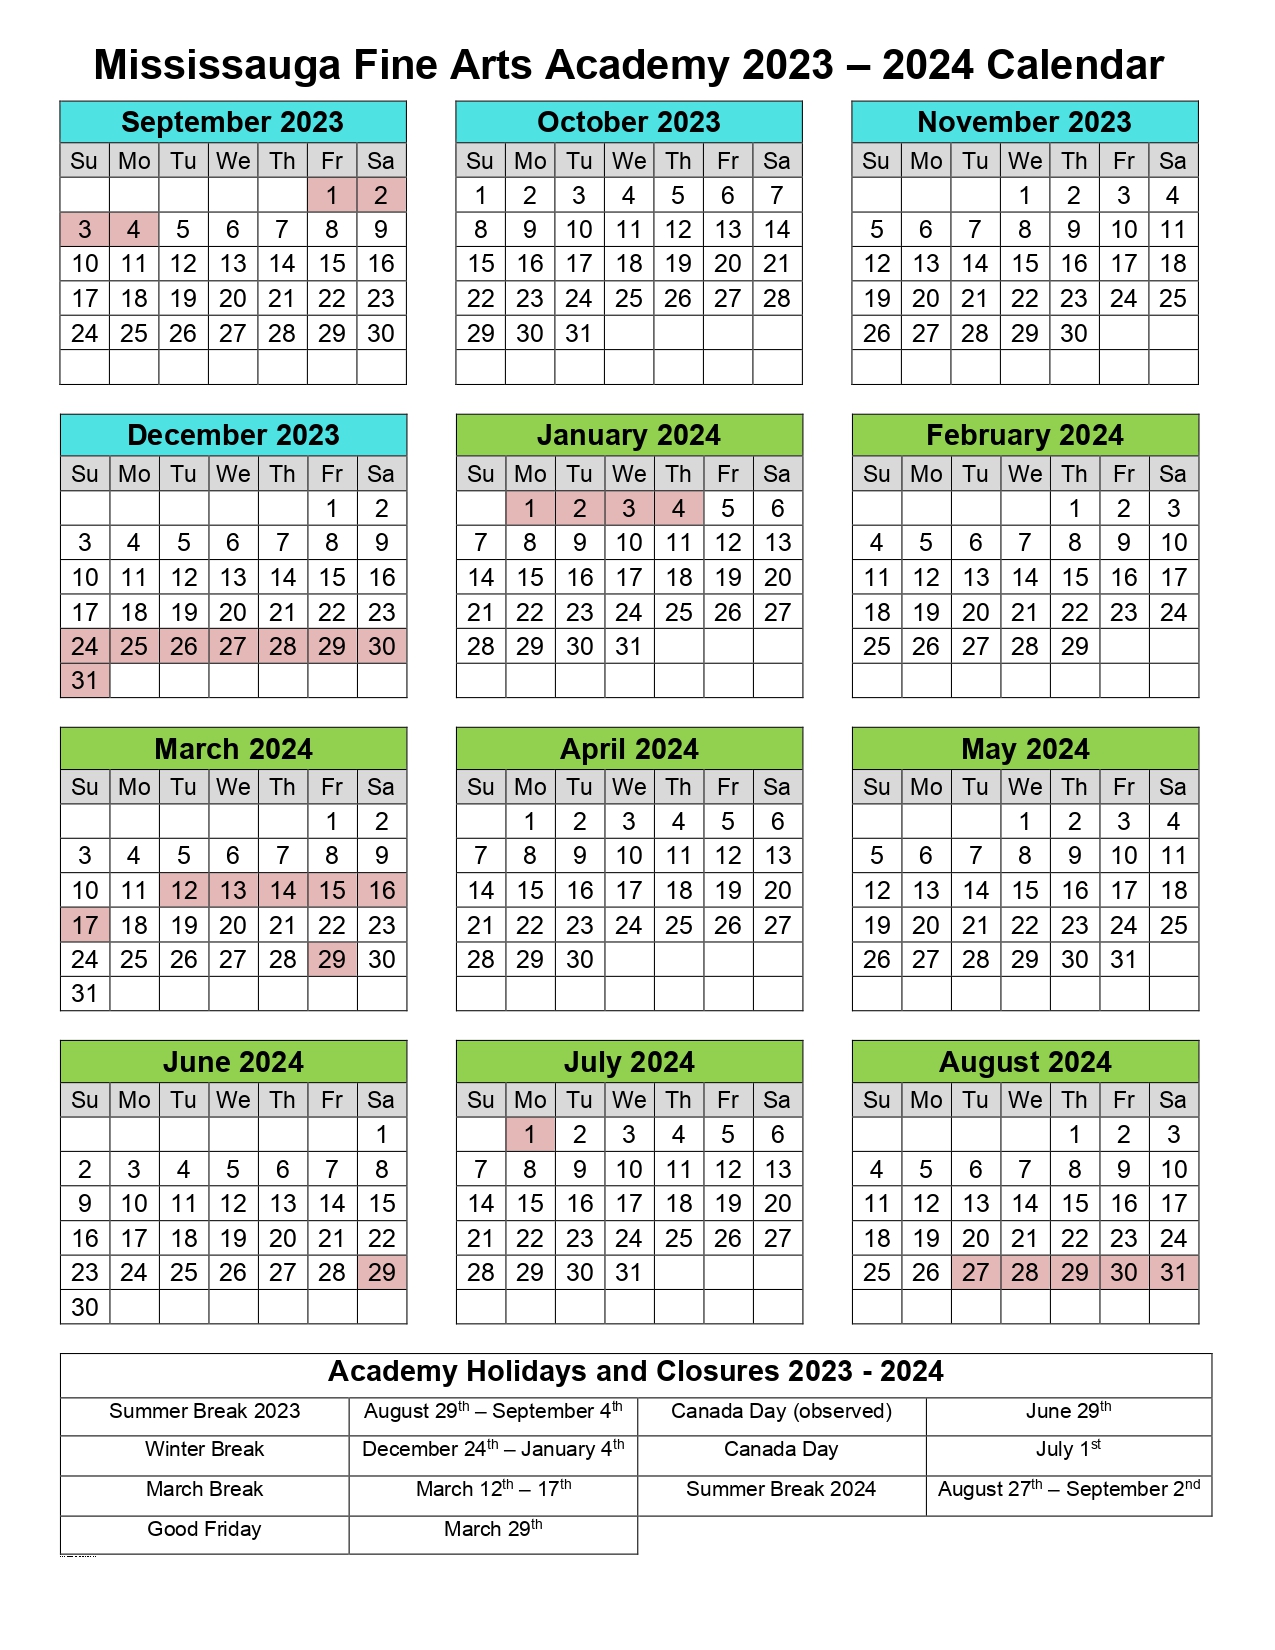 MFAA Calendar 2023 - 2024_page-0001